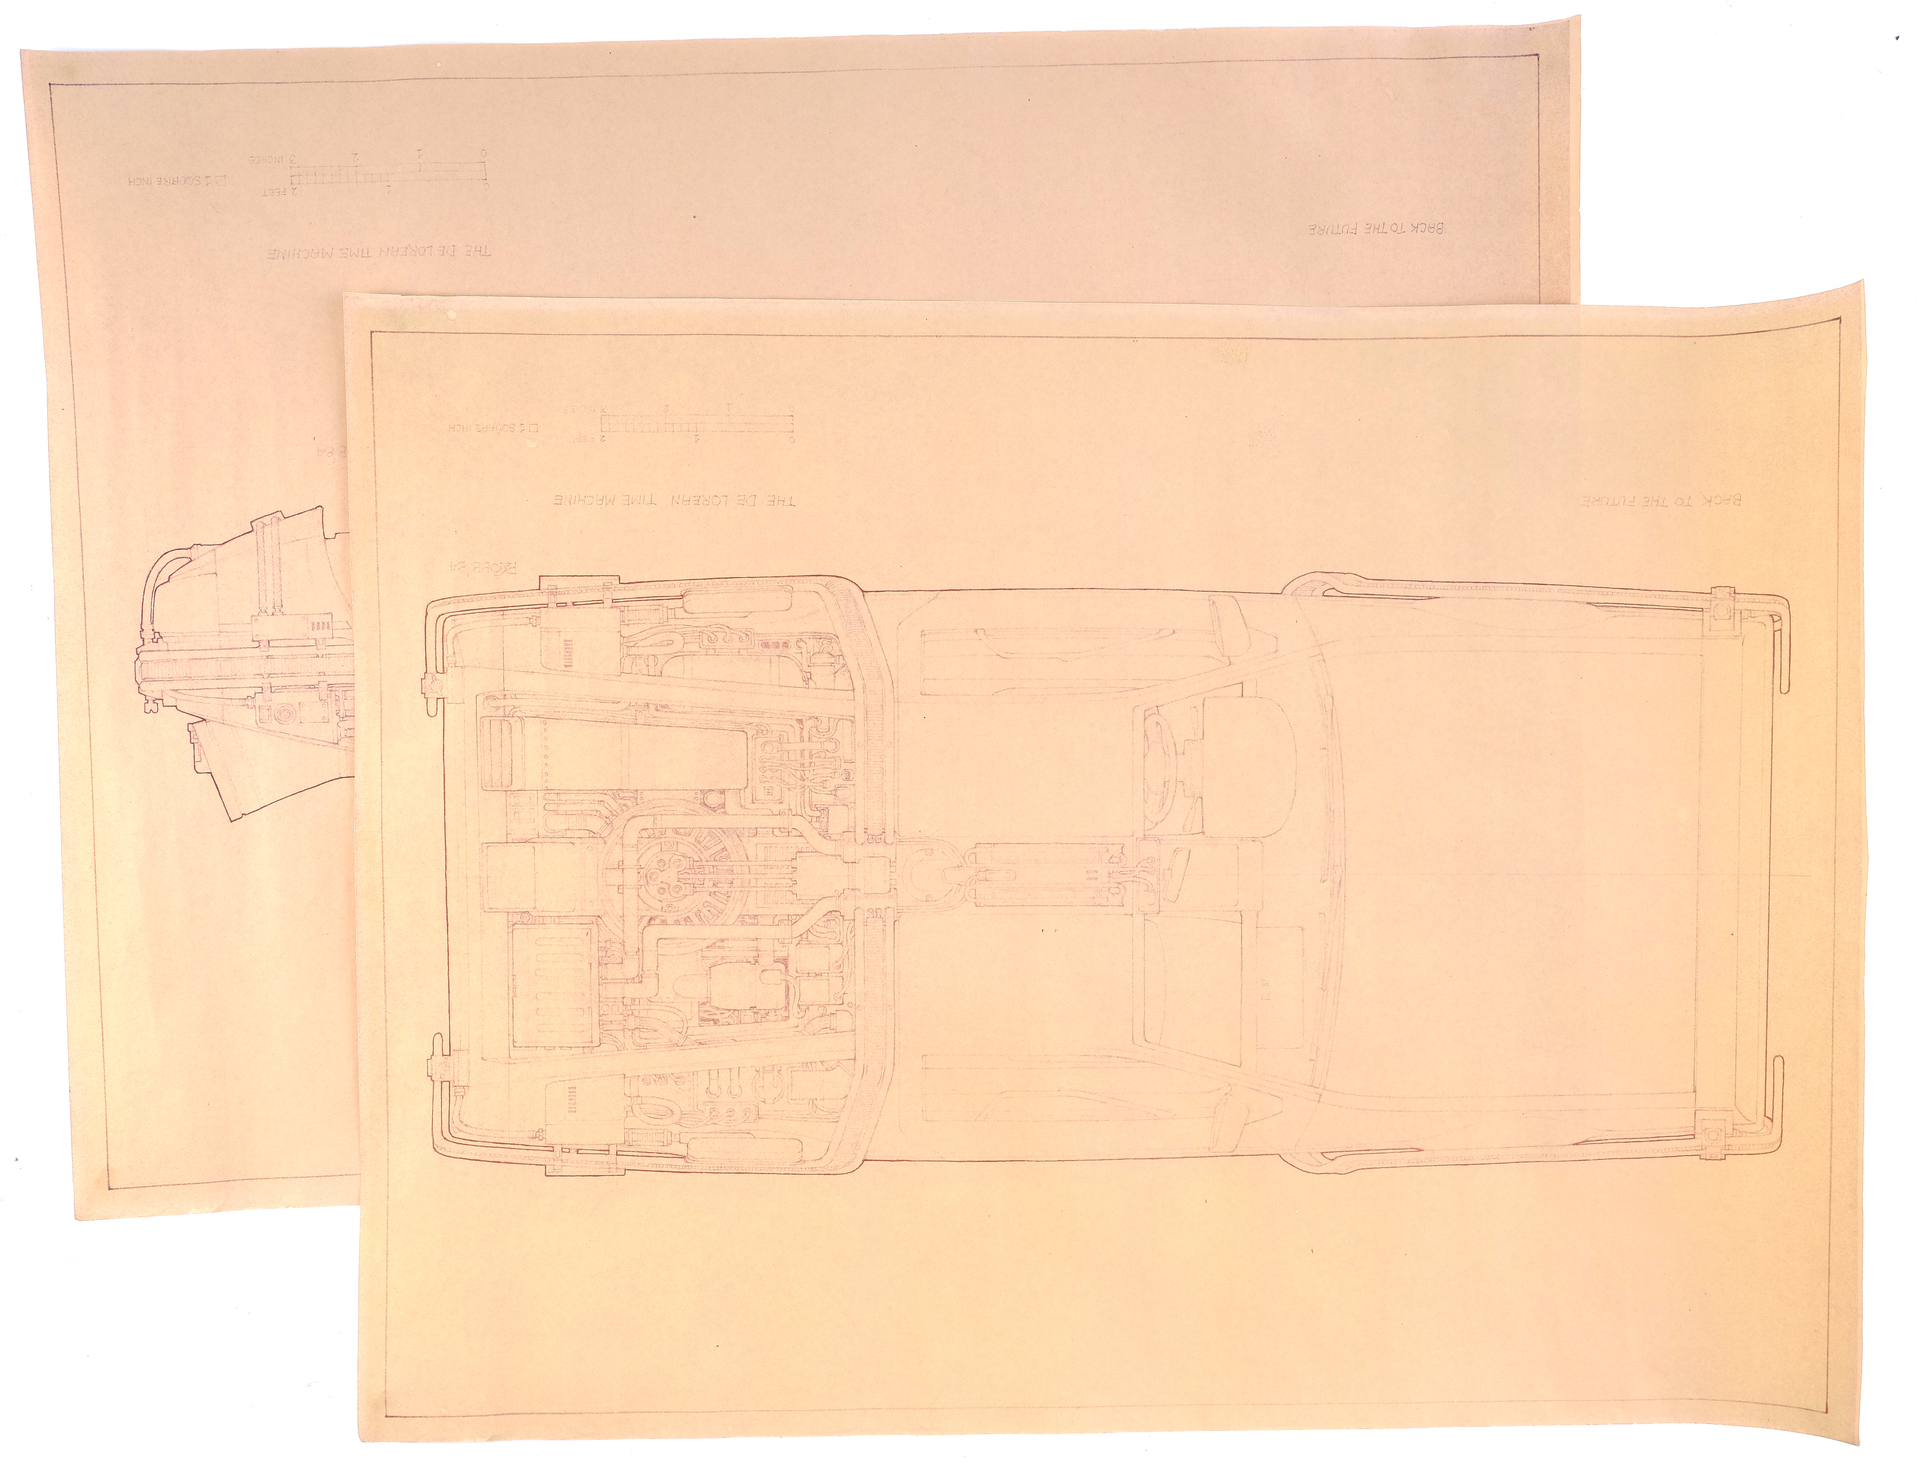 BACK TO THE FUTURE - Pair of Printed Ron Cobb DeLorean Time Machine Blueprints